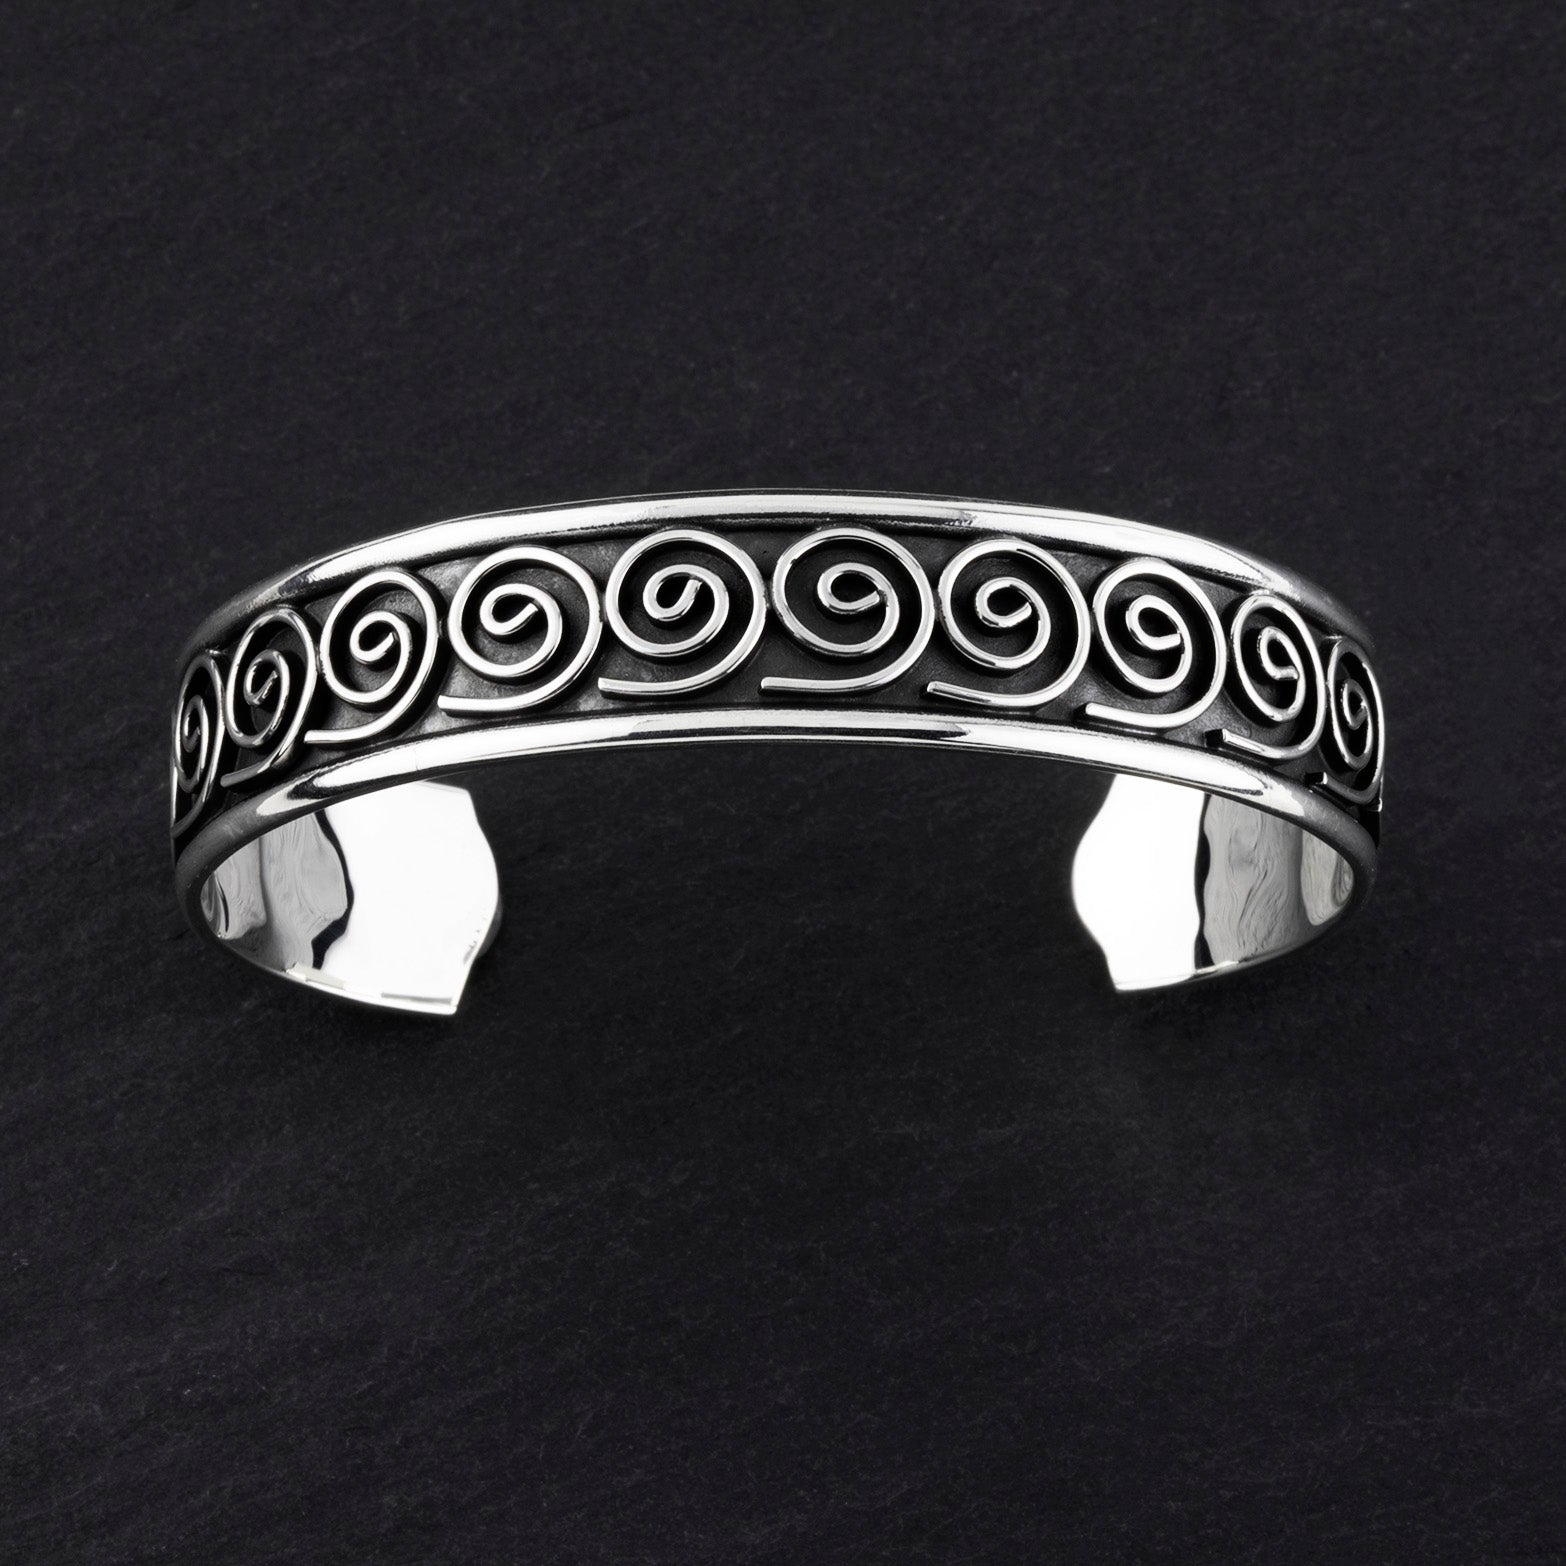 Taxco black silver boho spiral cuff bracelet